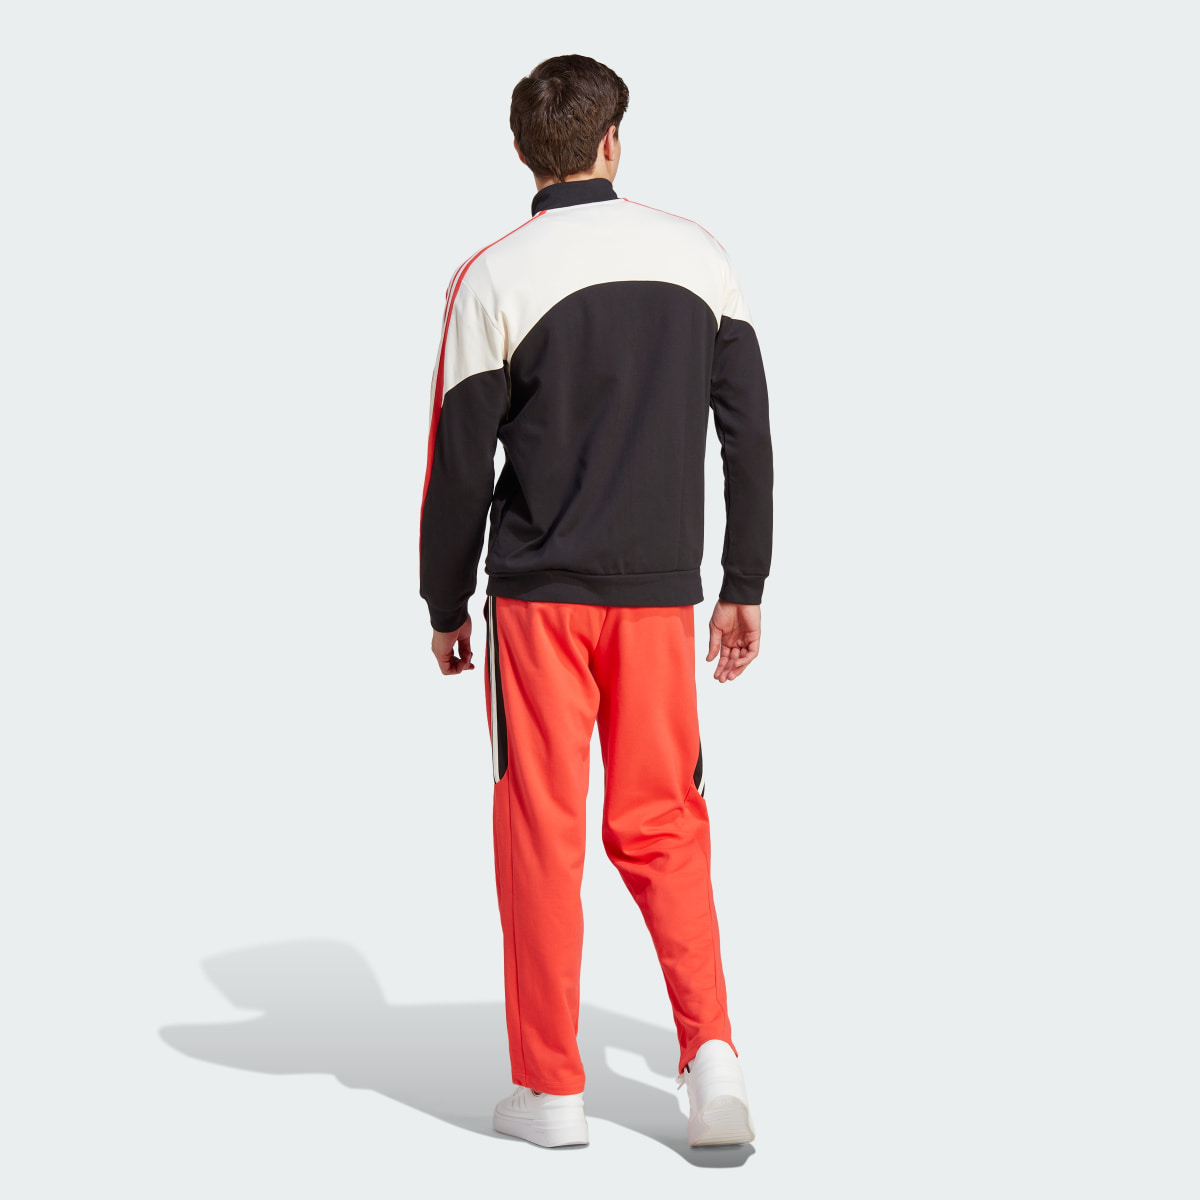 Adidas Colorblock Track Suit. 5